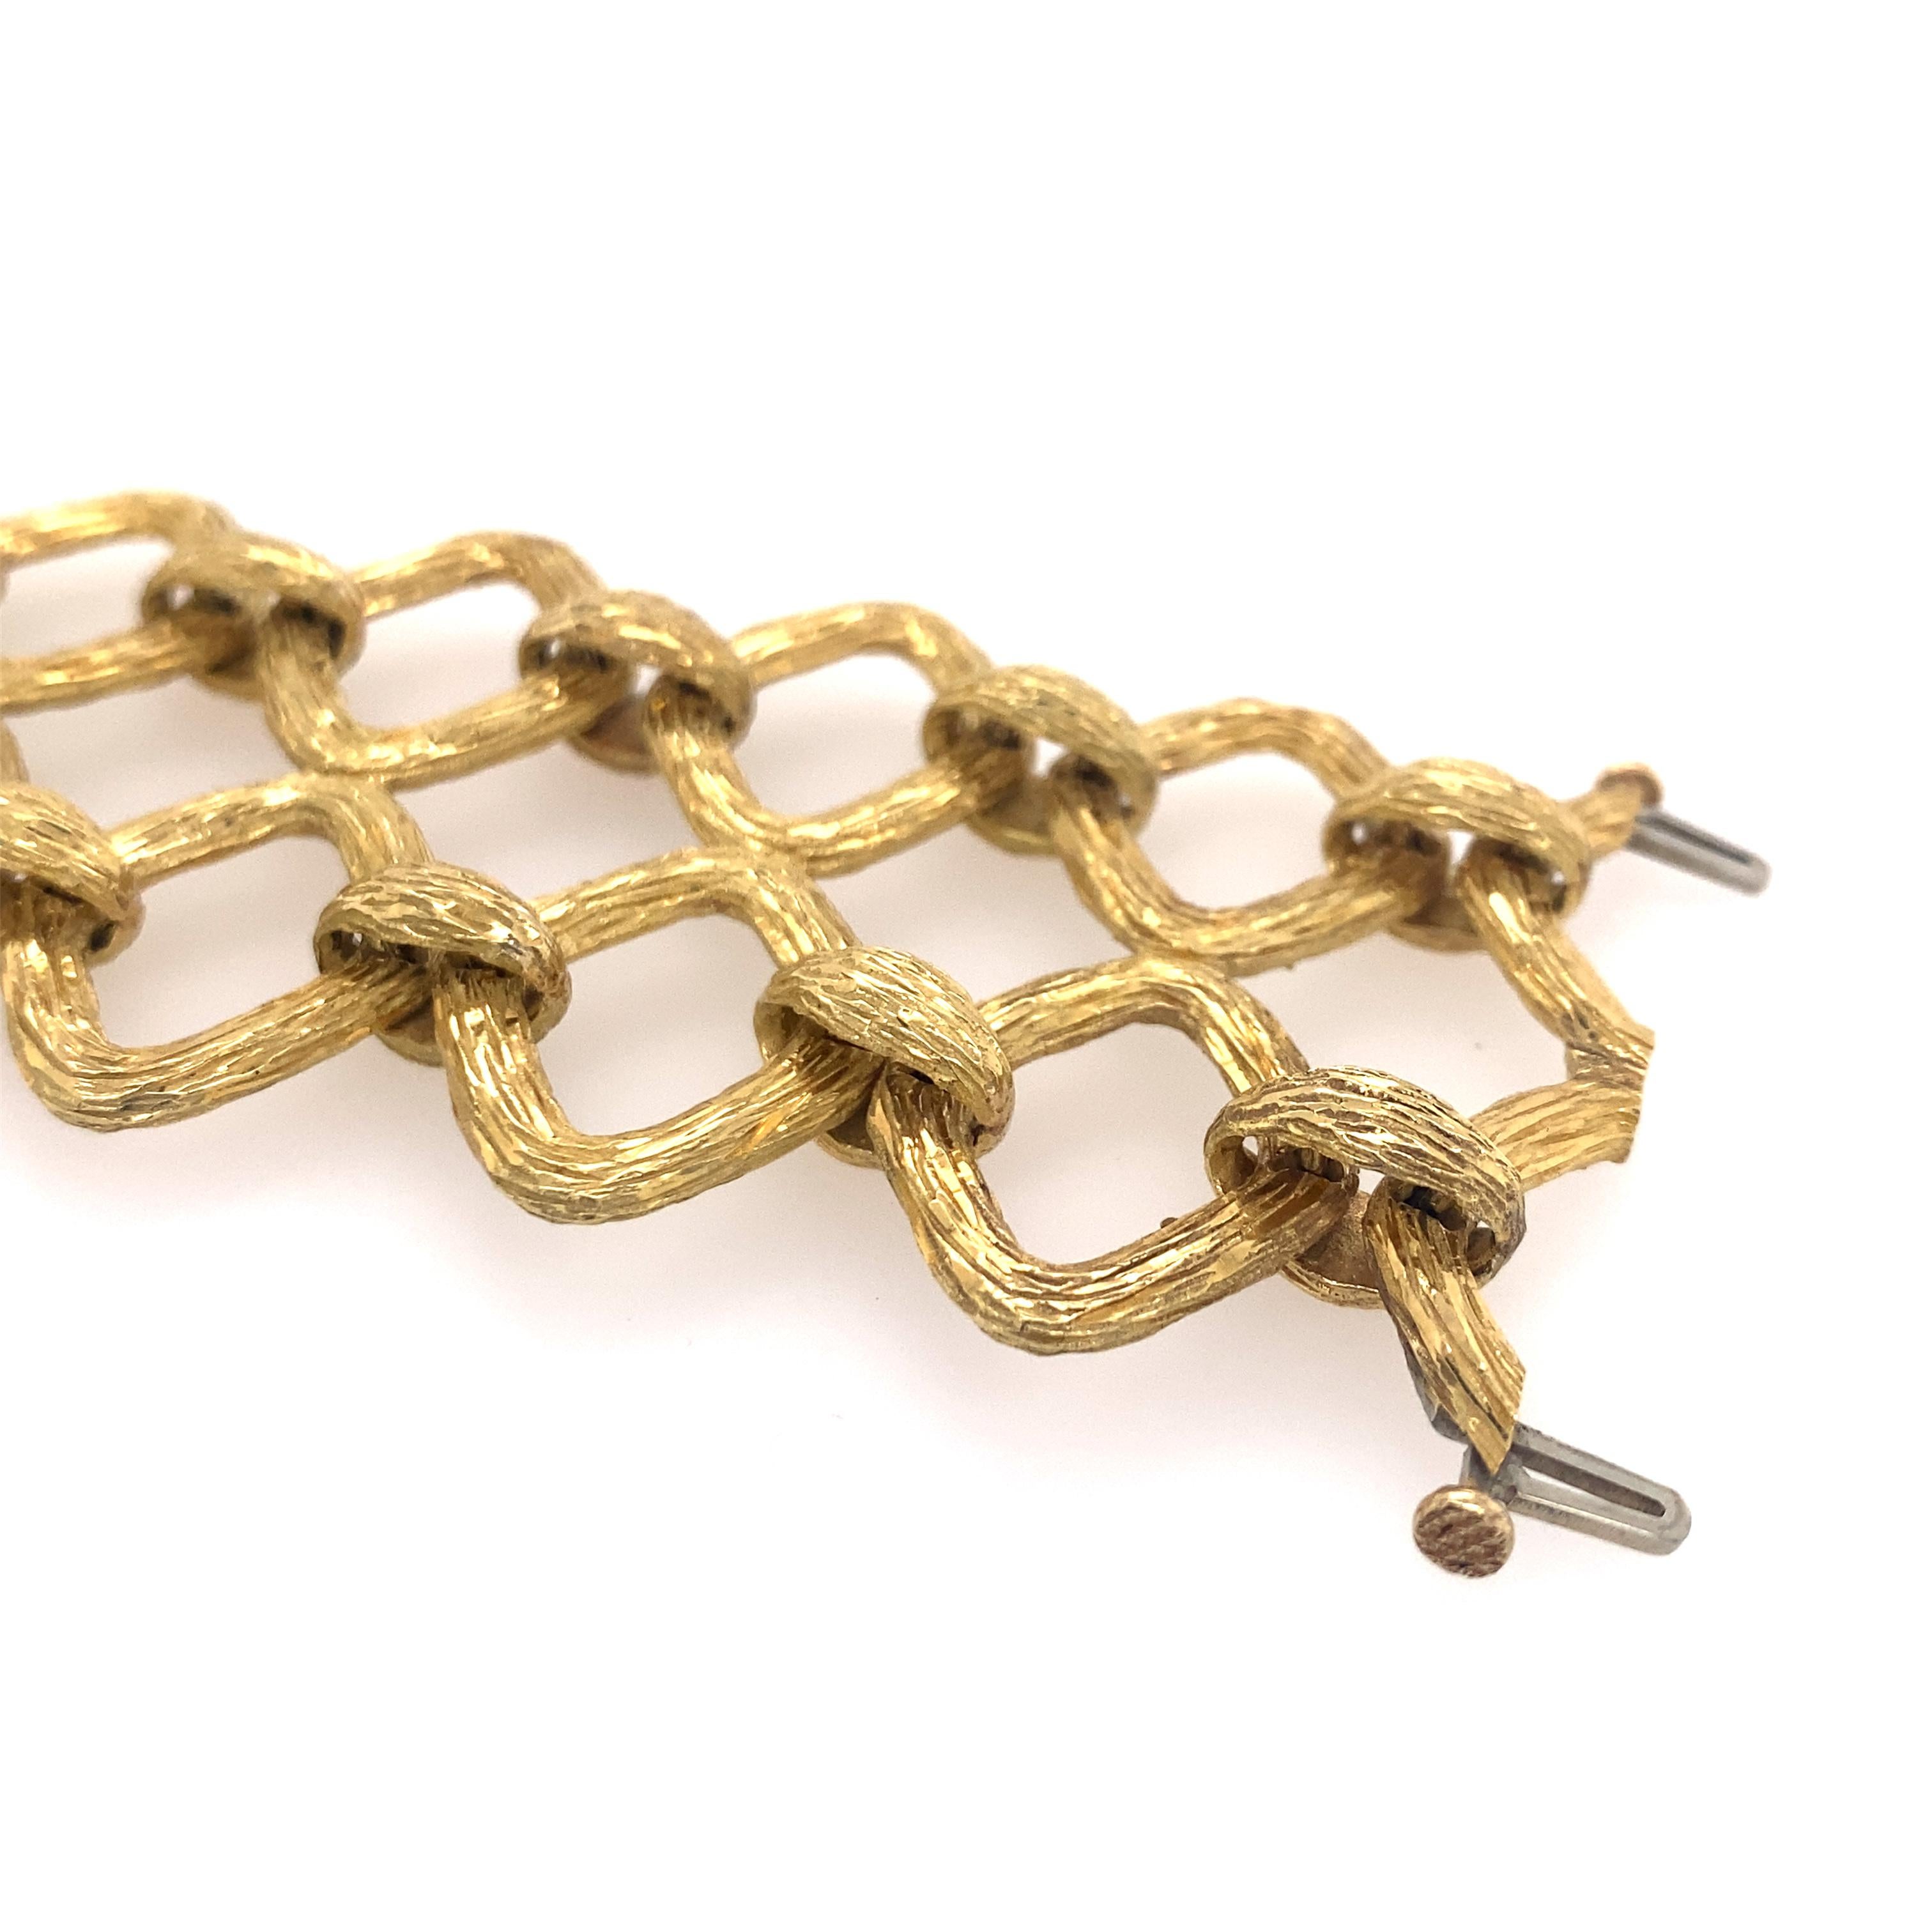 Diese 18k Gold  ganz Rinde beenden Vintage-Armband. 7 3/8